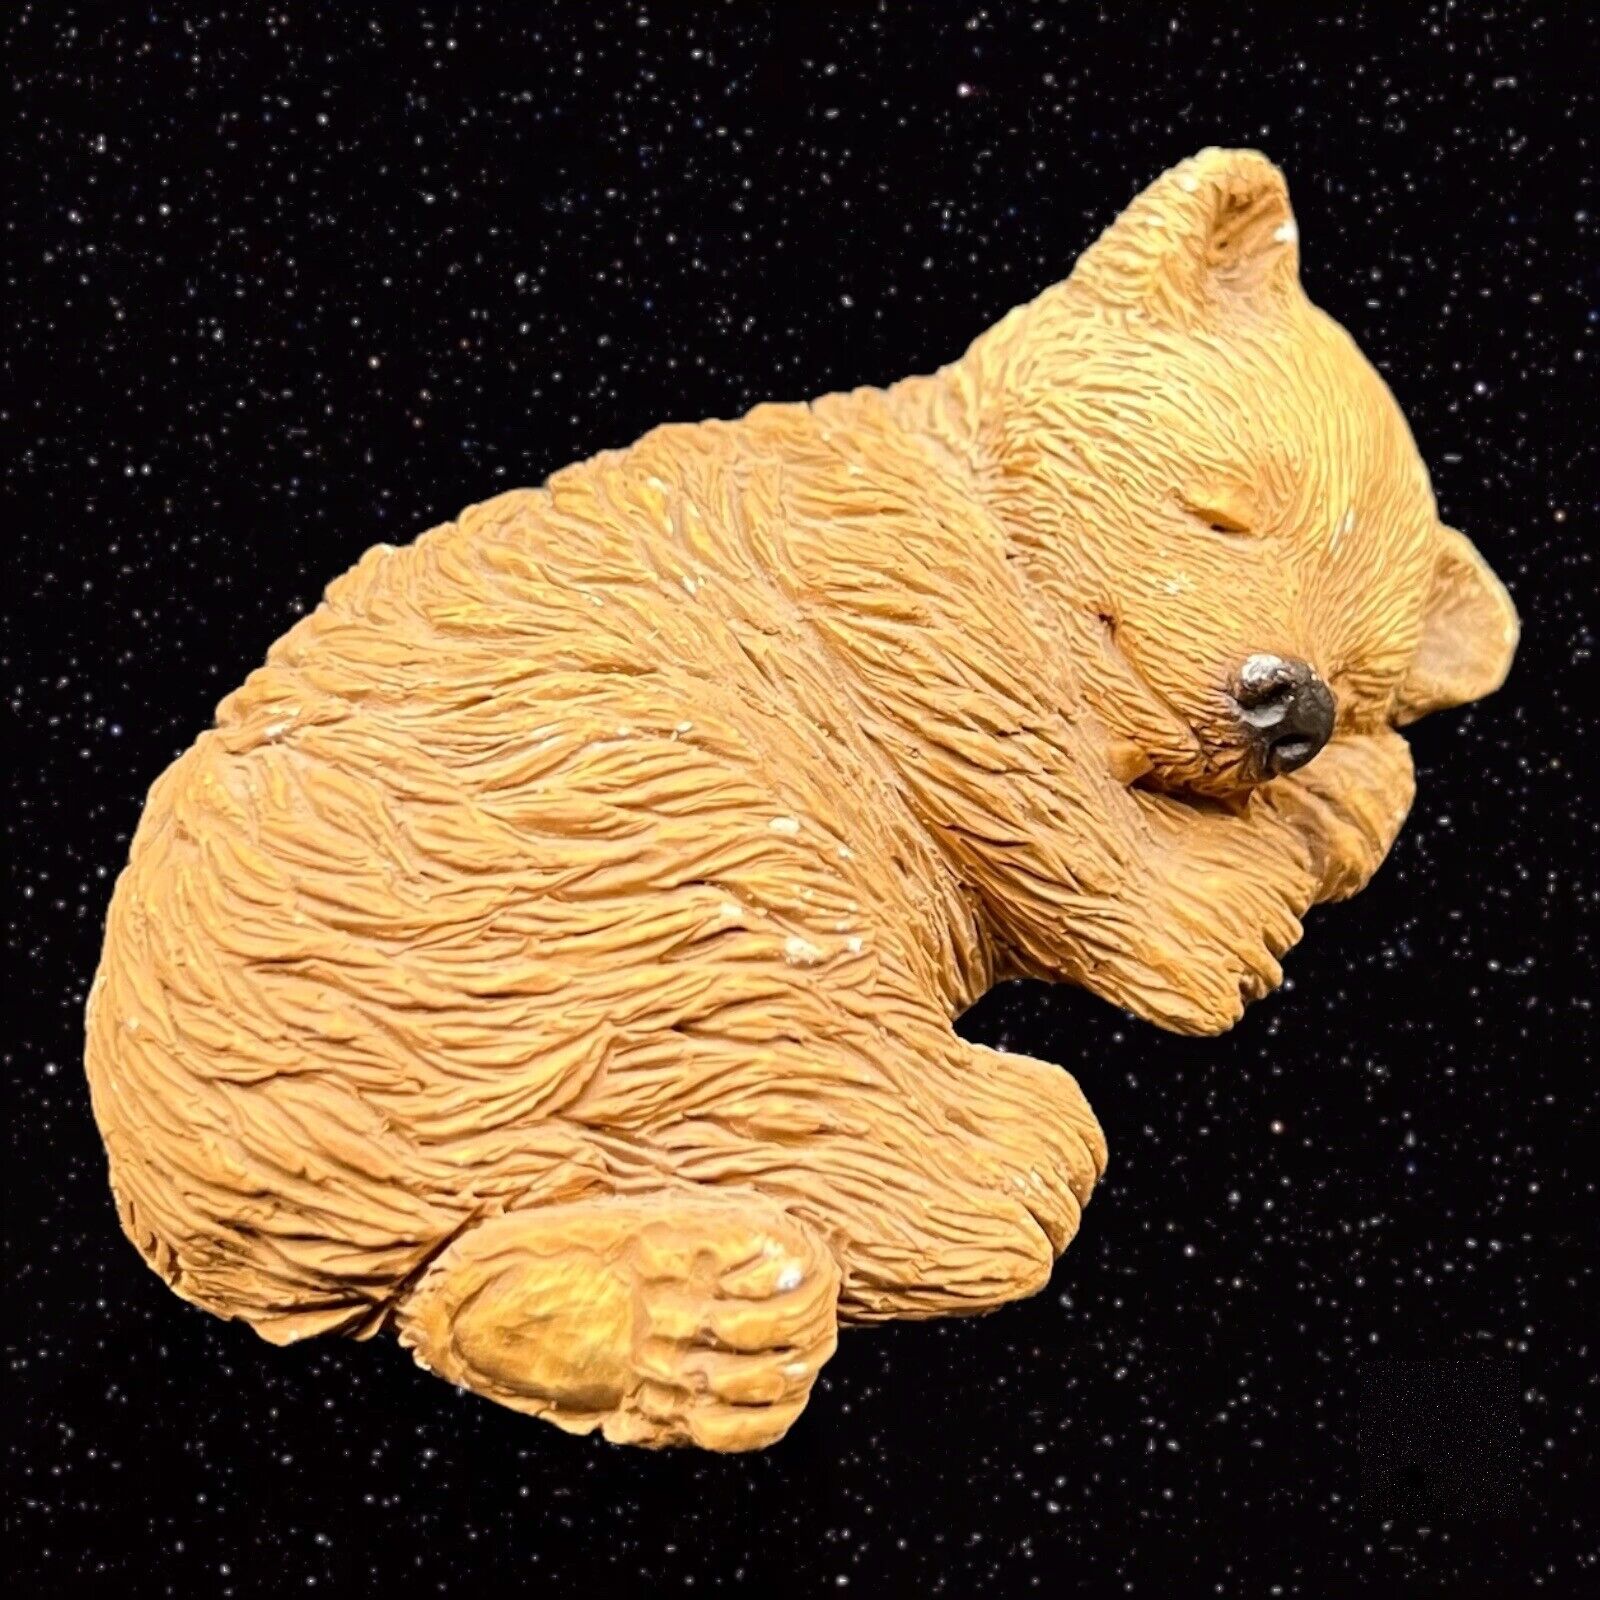 SANDICAST Sleeping Brown Bear Cub Figurine Laying Down Made in USA 2.75”W 1”T